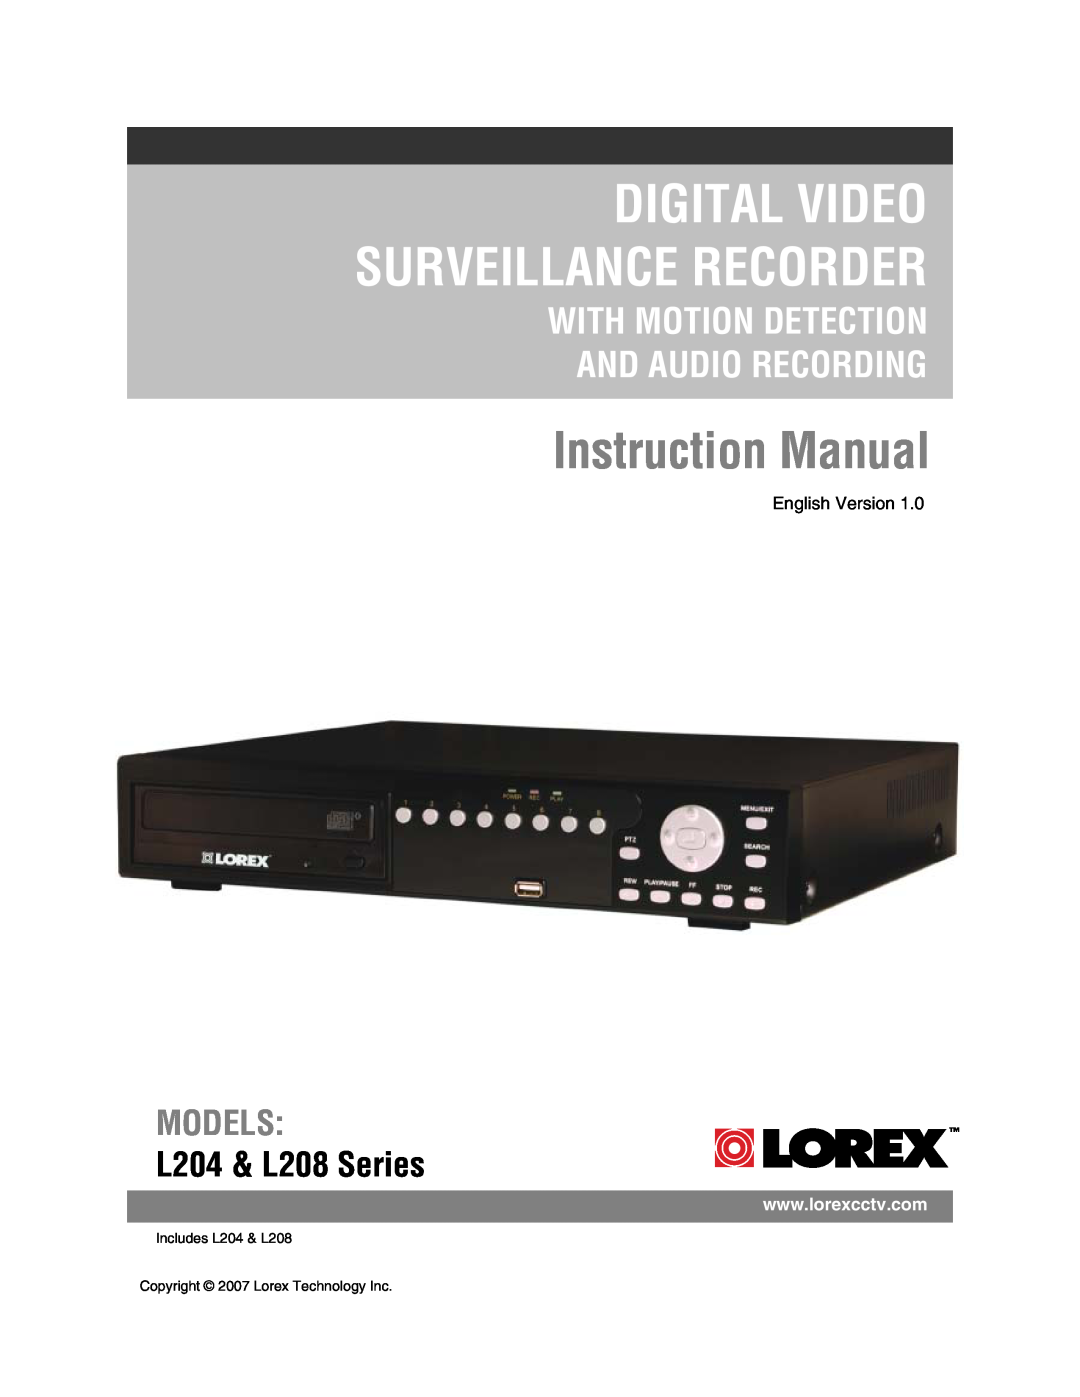 LOREX Technology L204, L208 instruction manual Digital Video Surveillance Recorder, Instruction Manual, Models 